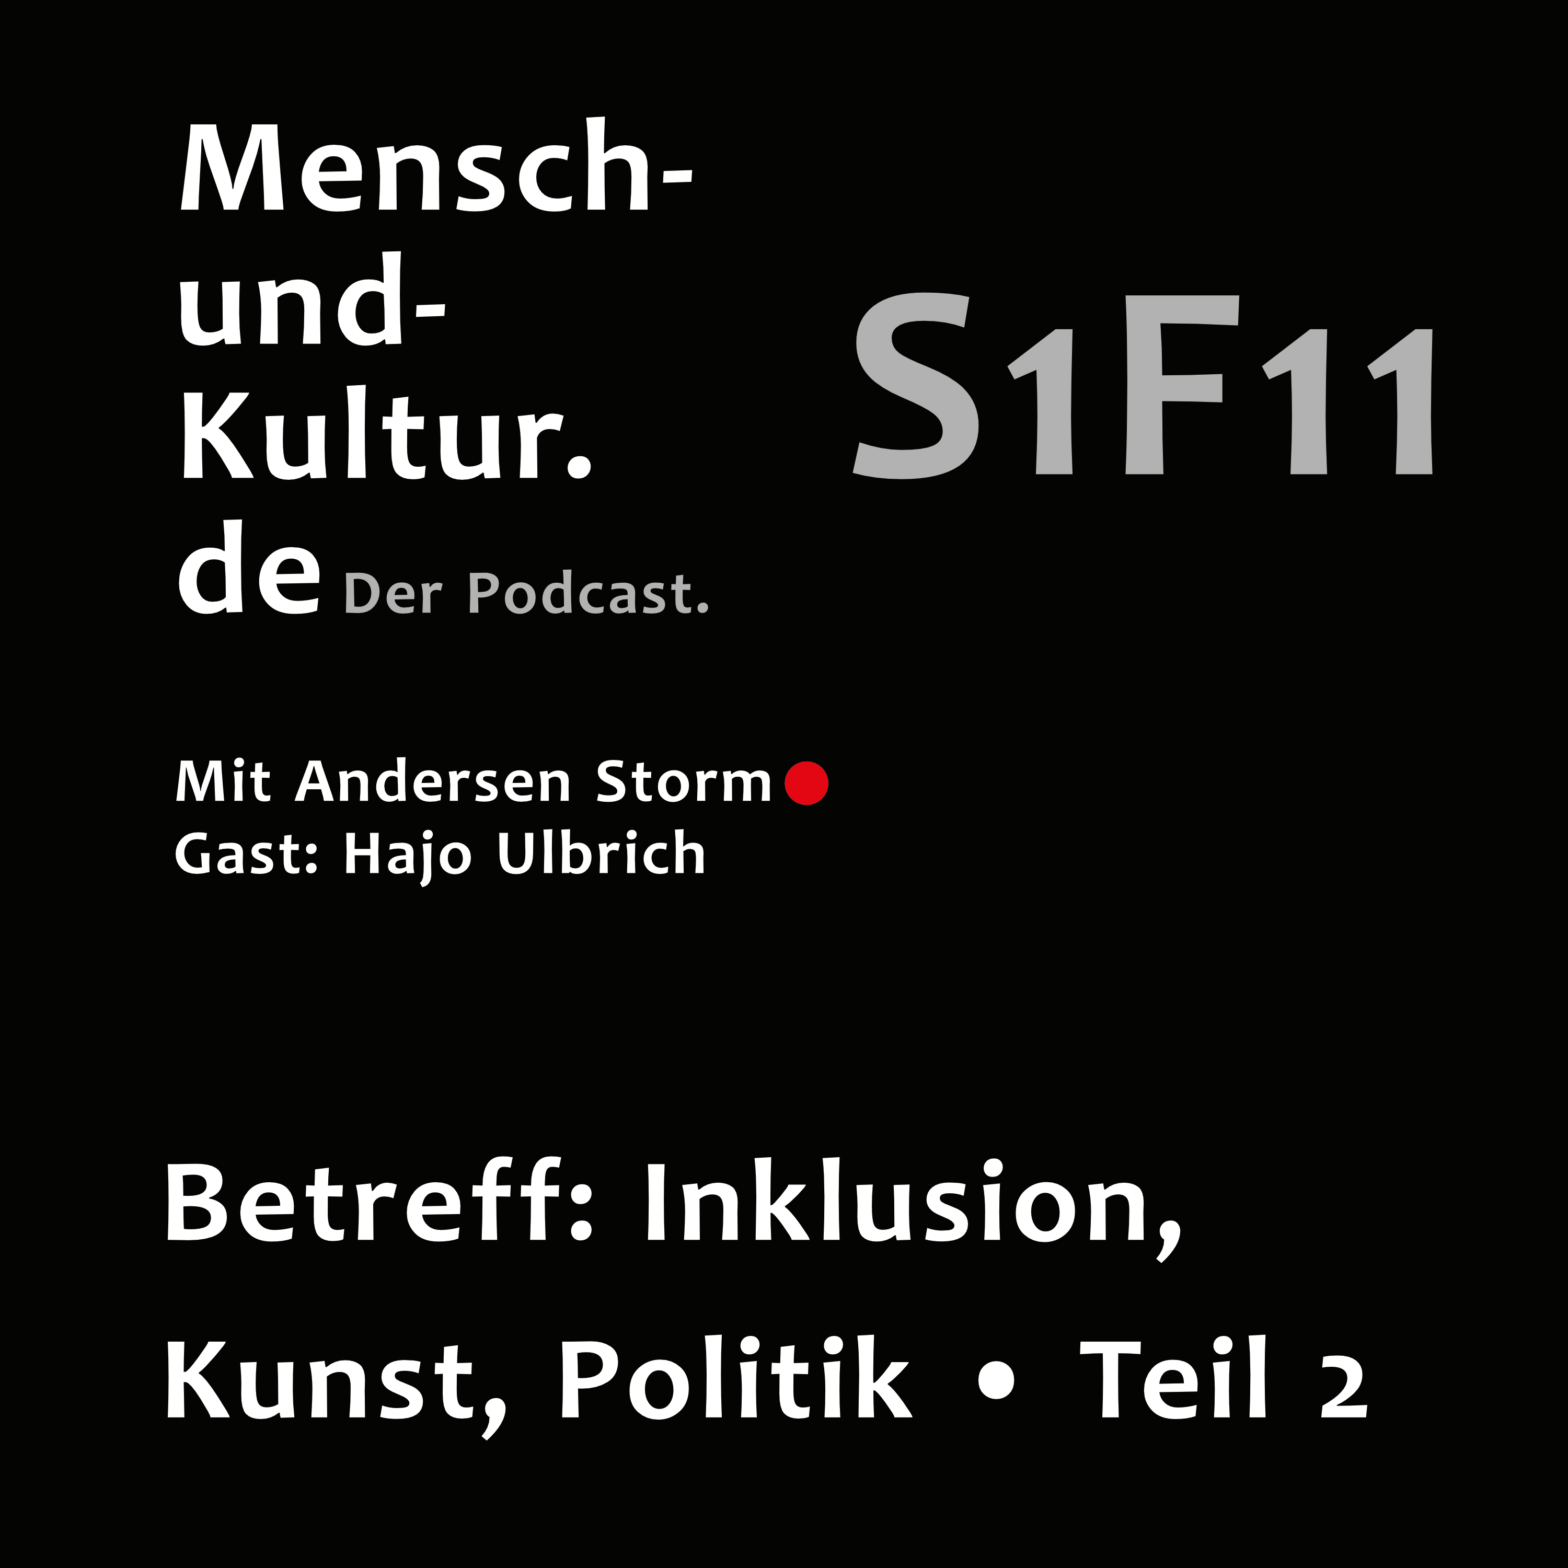 Podcastepisode S1F11, Mensch-und-Kultur.de - der Podcast